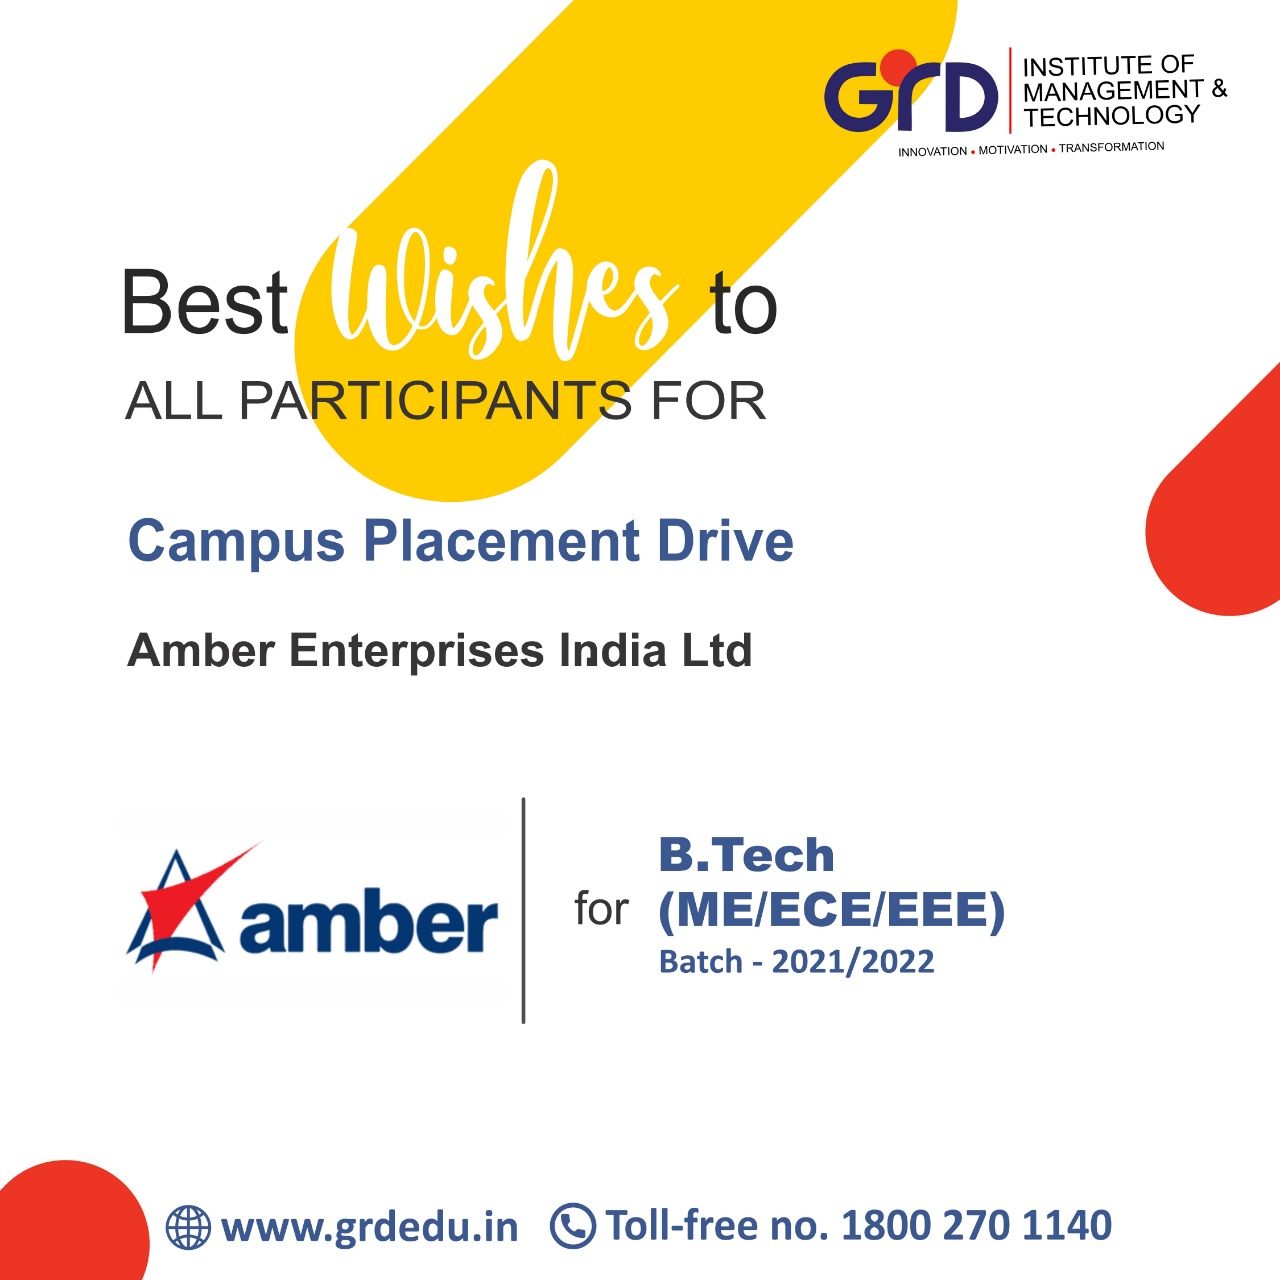 Amber Enterprises India Ltd.